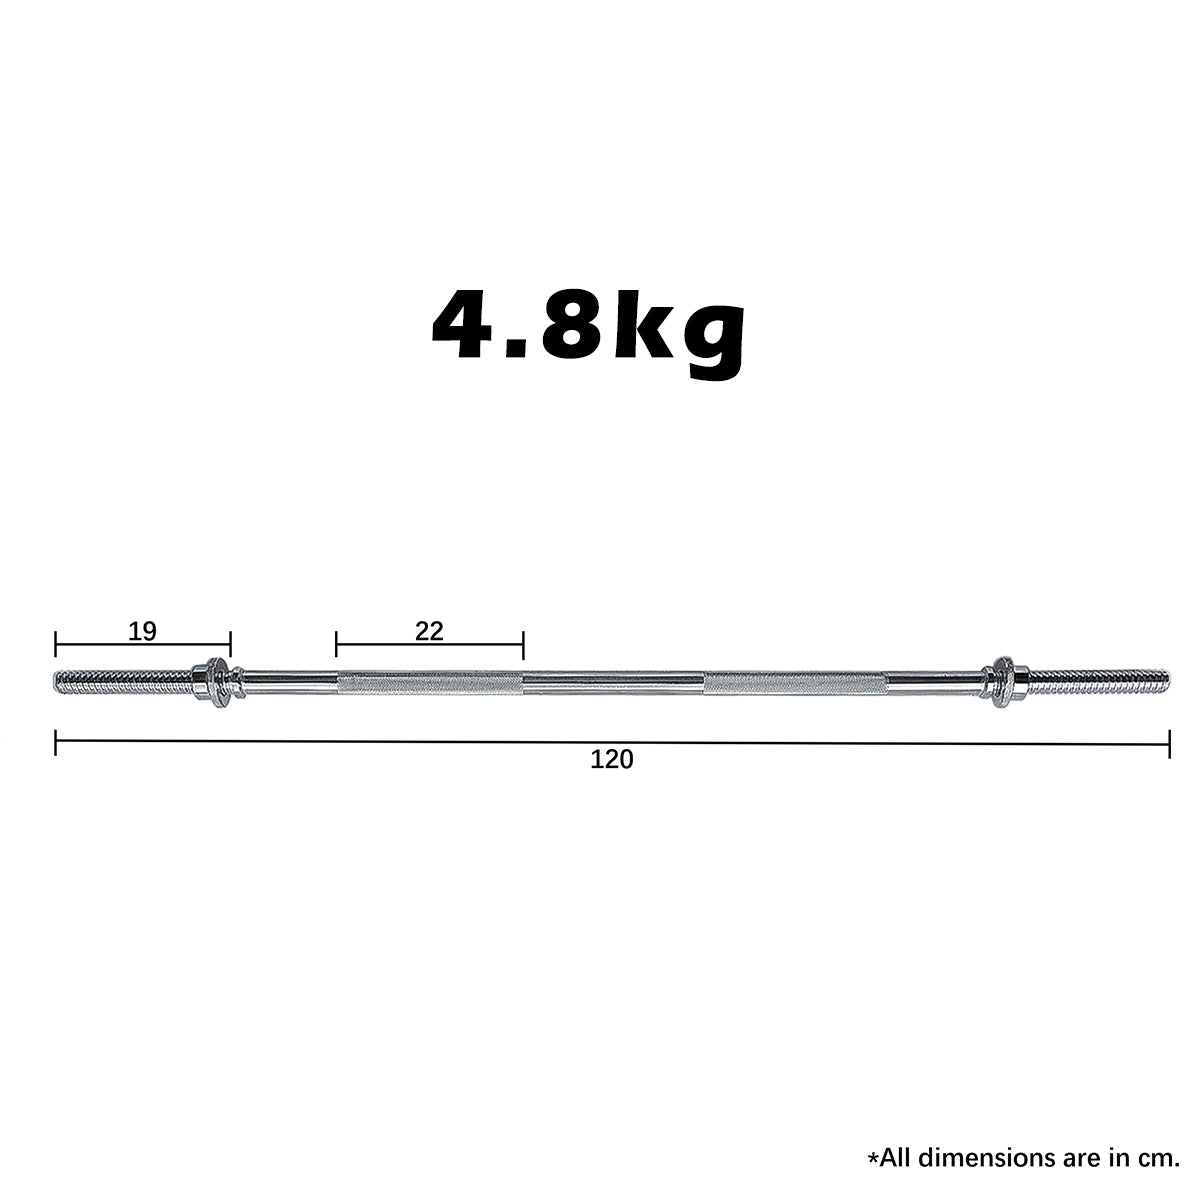 1.2m Standard Steel Straight Barbell dimensions